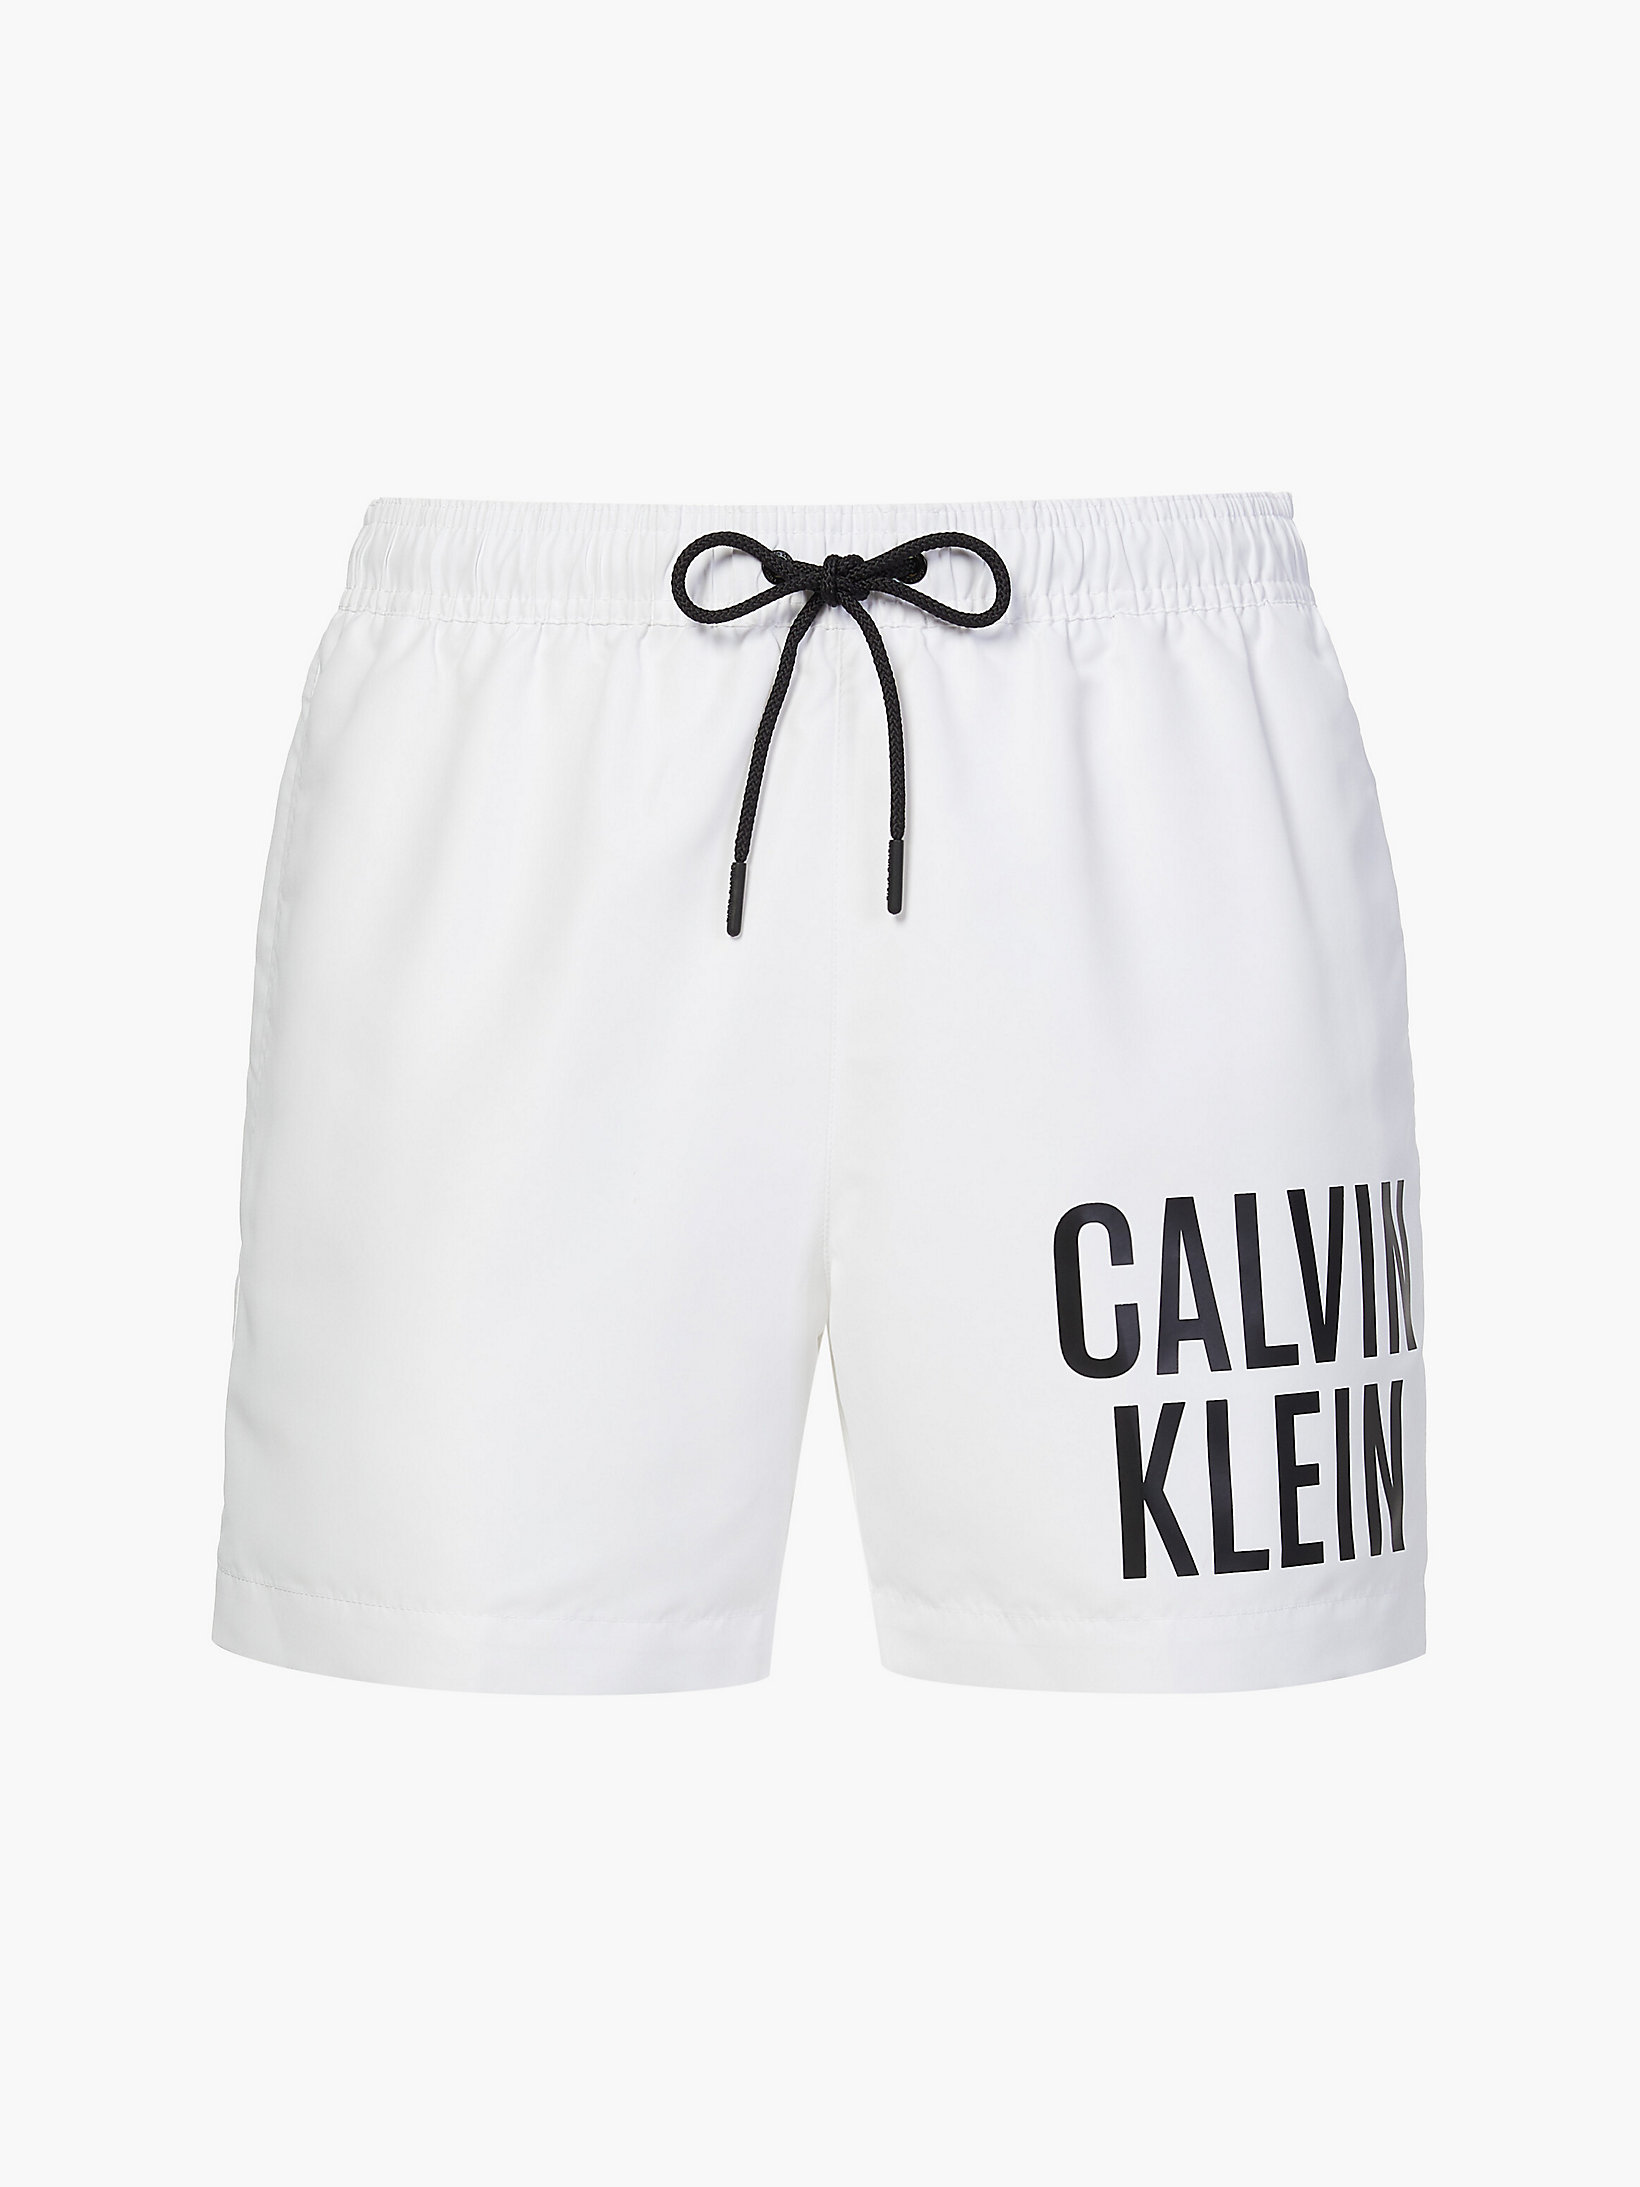 Pvh Classic White Medium Drawstring Swim Shorts - Intense Power undefined men Calvin Klein